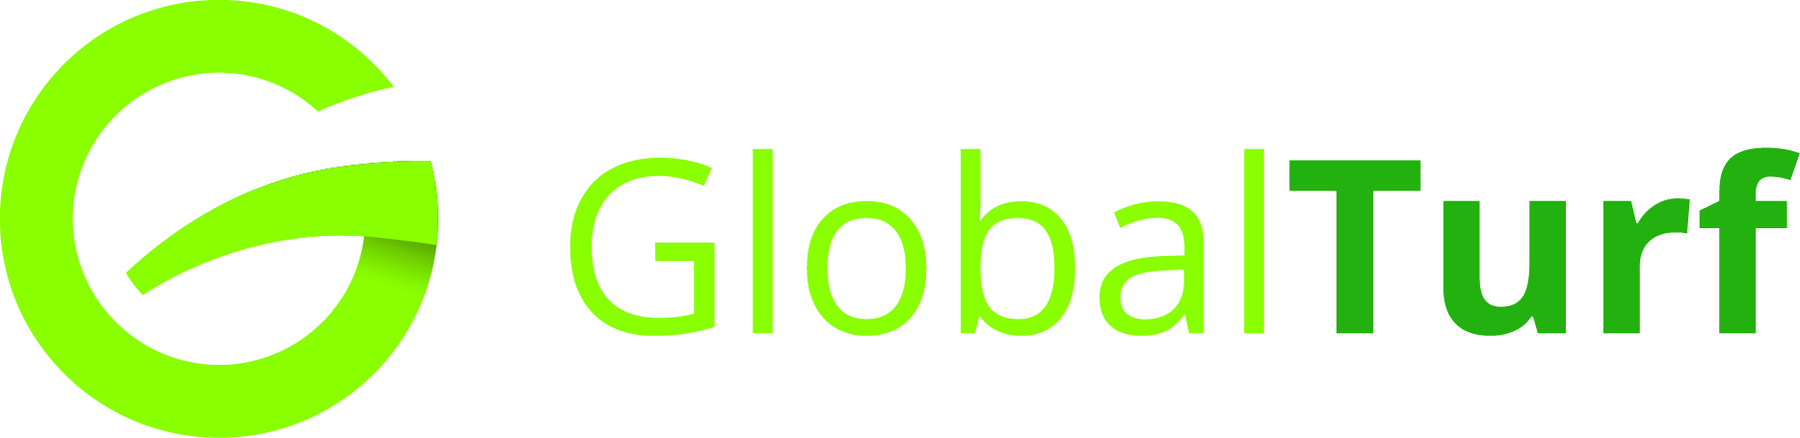 Global Turf Logo Horizontal 4c